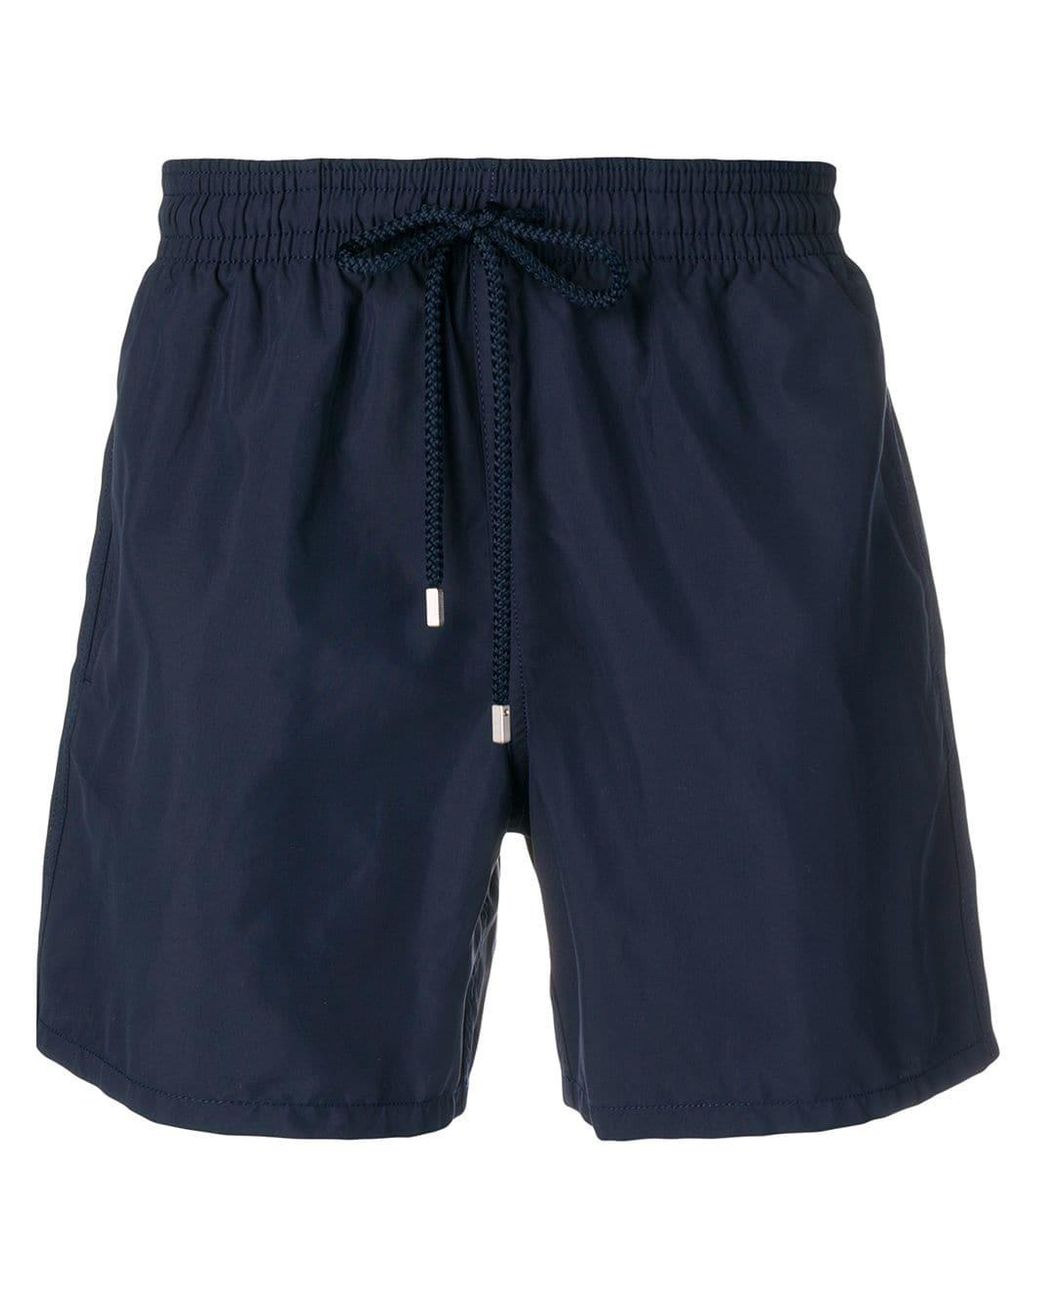 Vilebrequin Cotton Plain Swim Shorts in Blue for Men - Lyst